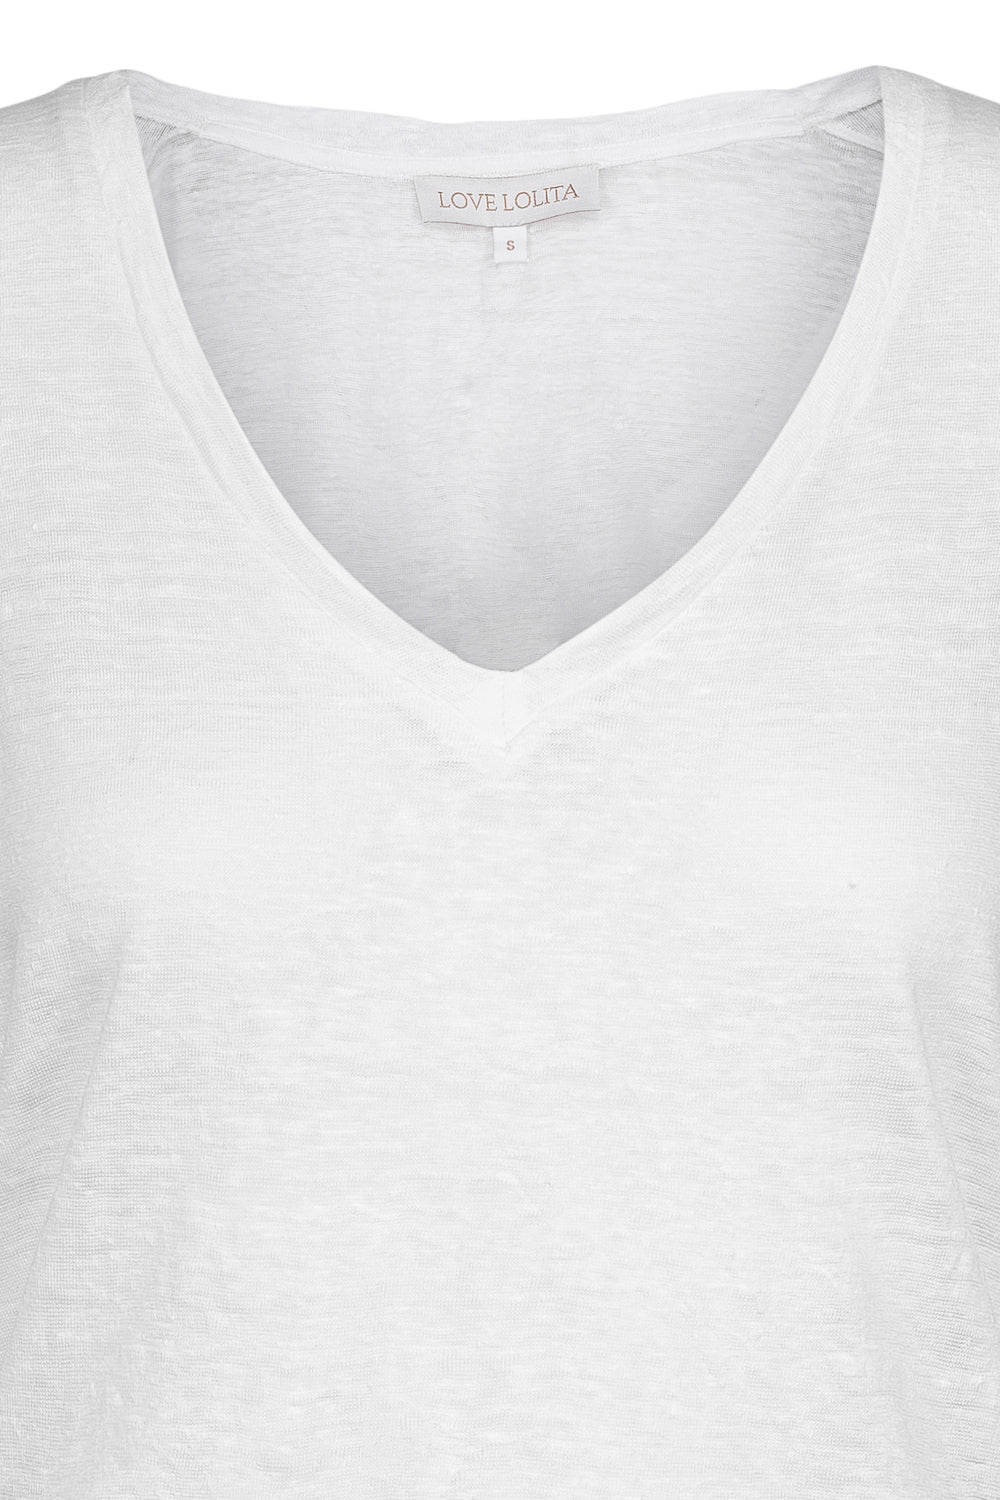 Lulu T-shirt White